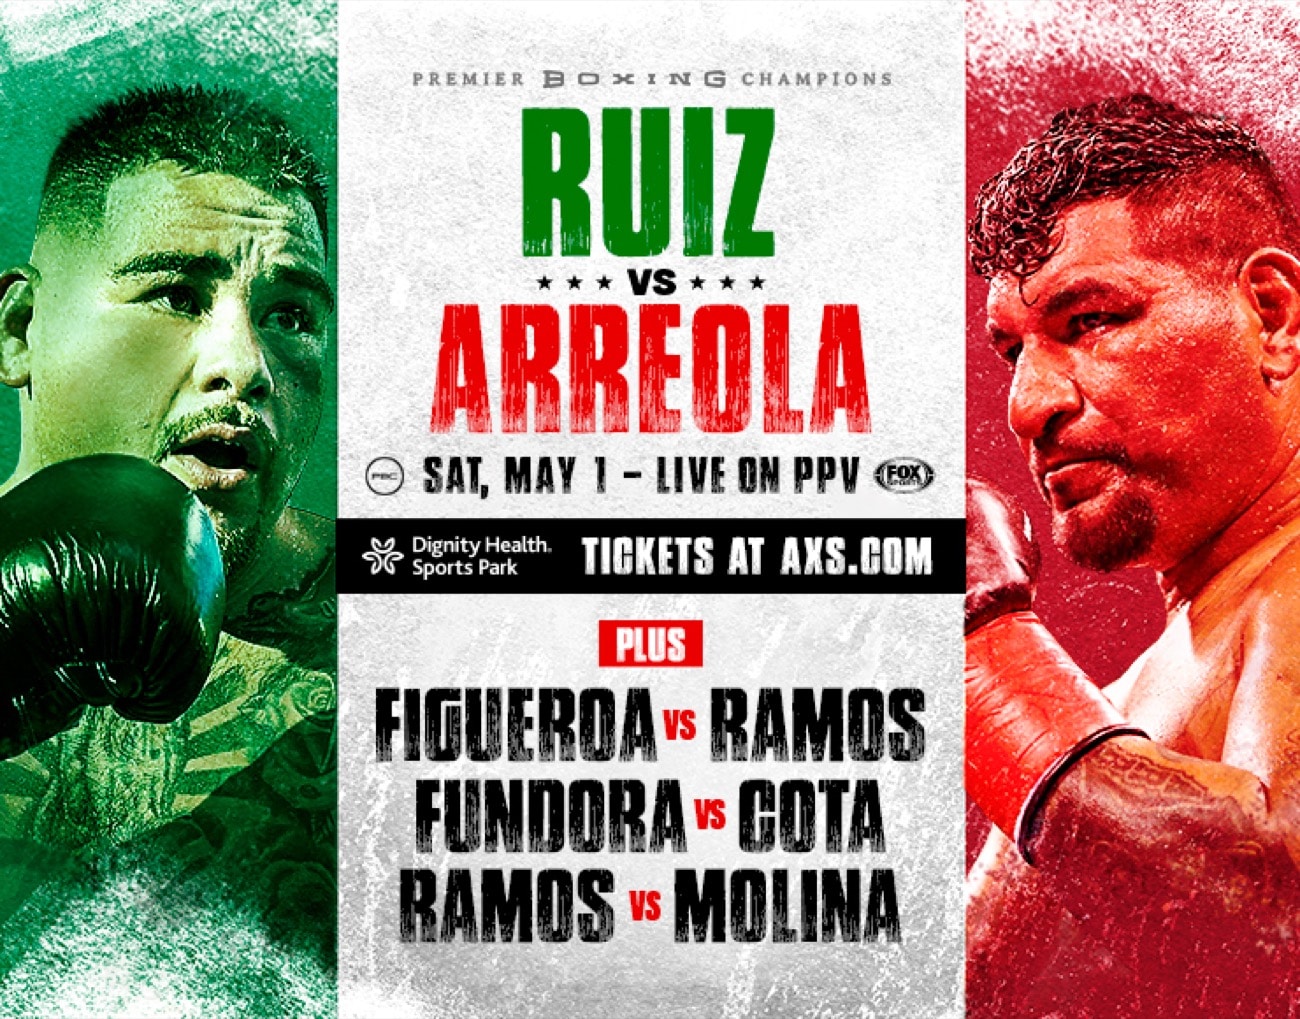 Image: Arreola hopes beating Ruiz will lead to title shot